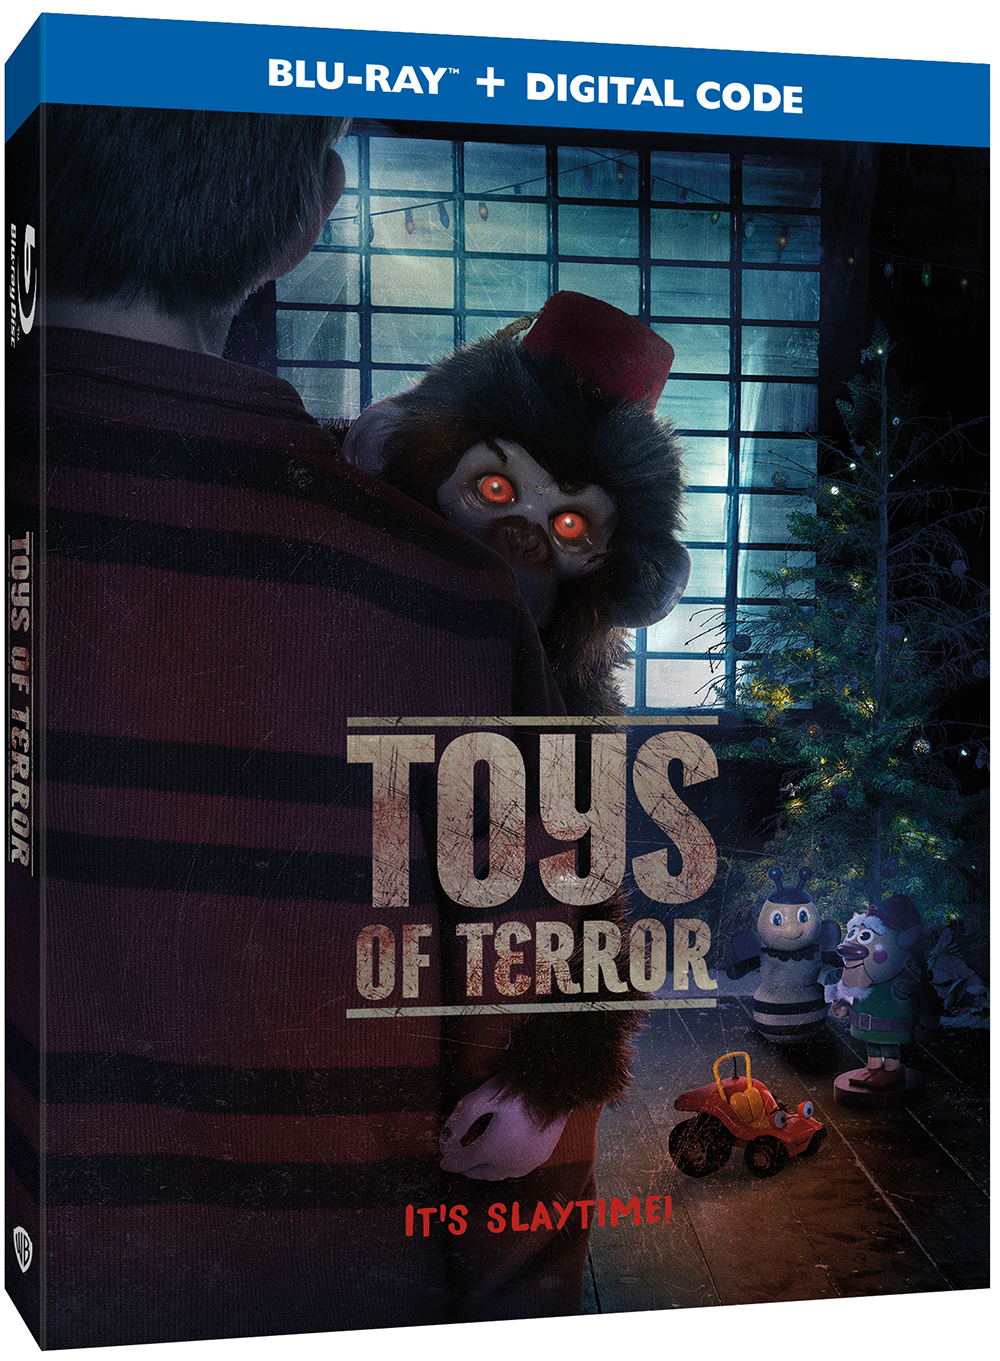 Dana Gould's 'Toys of Terror'